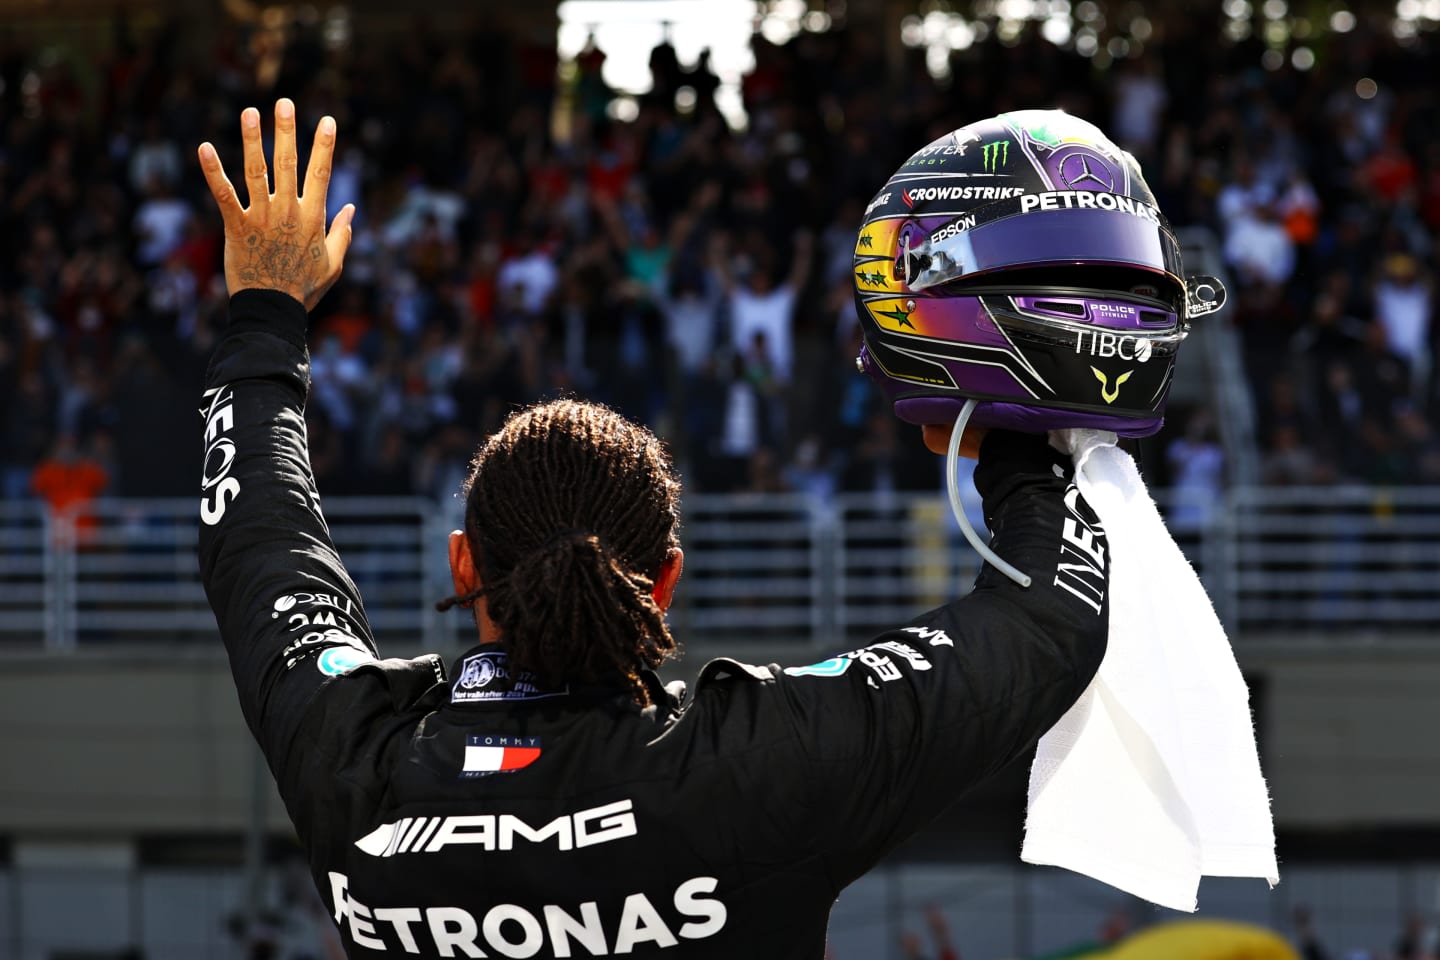 SAO PAULO, BRAZIL - NOVEMBER 14: Race winner Lewis Hamilton of Great Britain and Mercedes GP